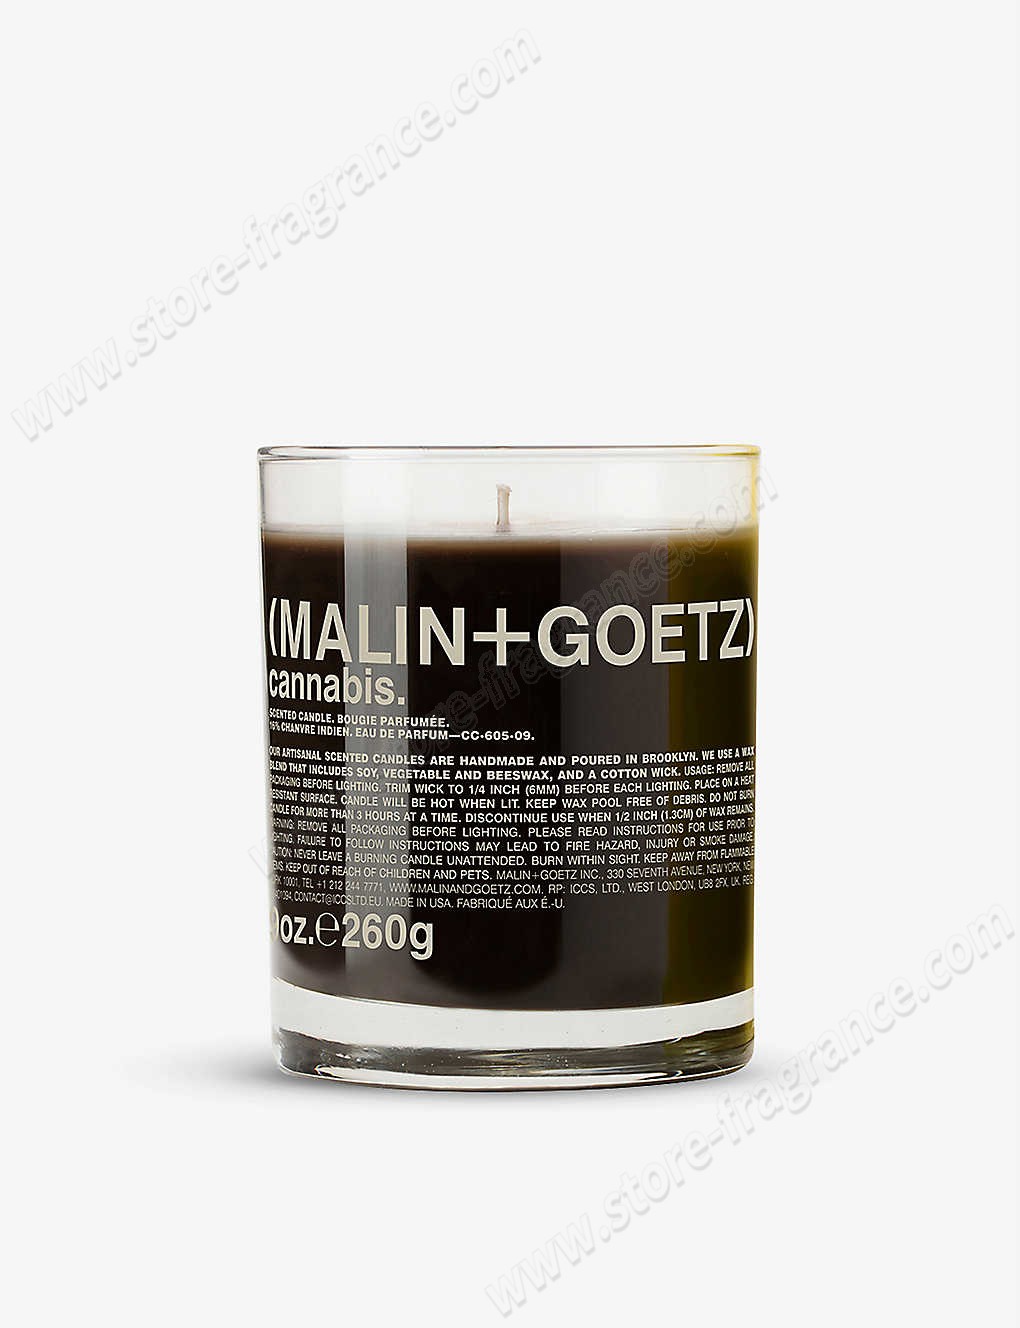 MALIN + GOETZ/Cannabis candle 260g ✿ Discount Store - MALIN + GOETZ/Cannabis candle 260g ✿ Discount Store